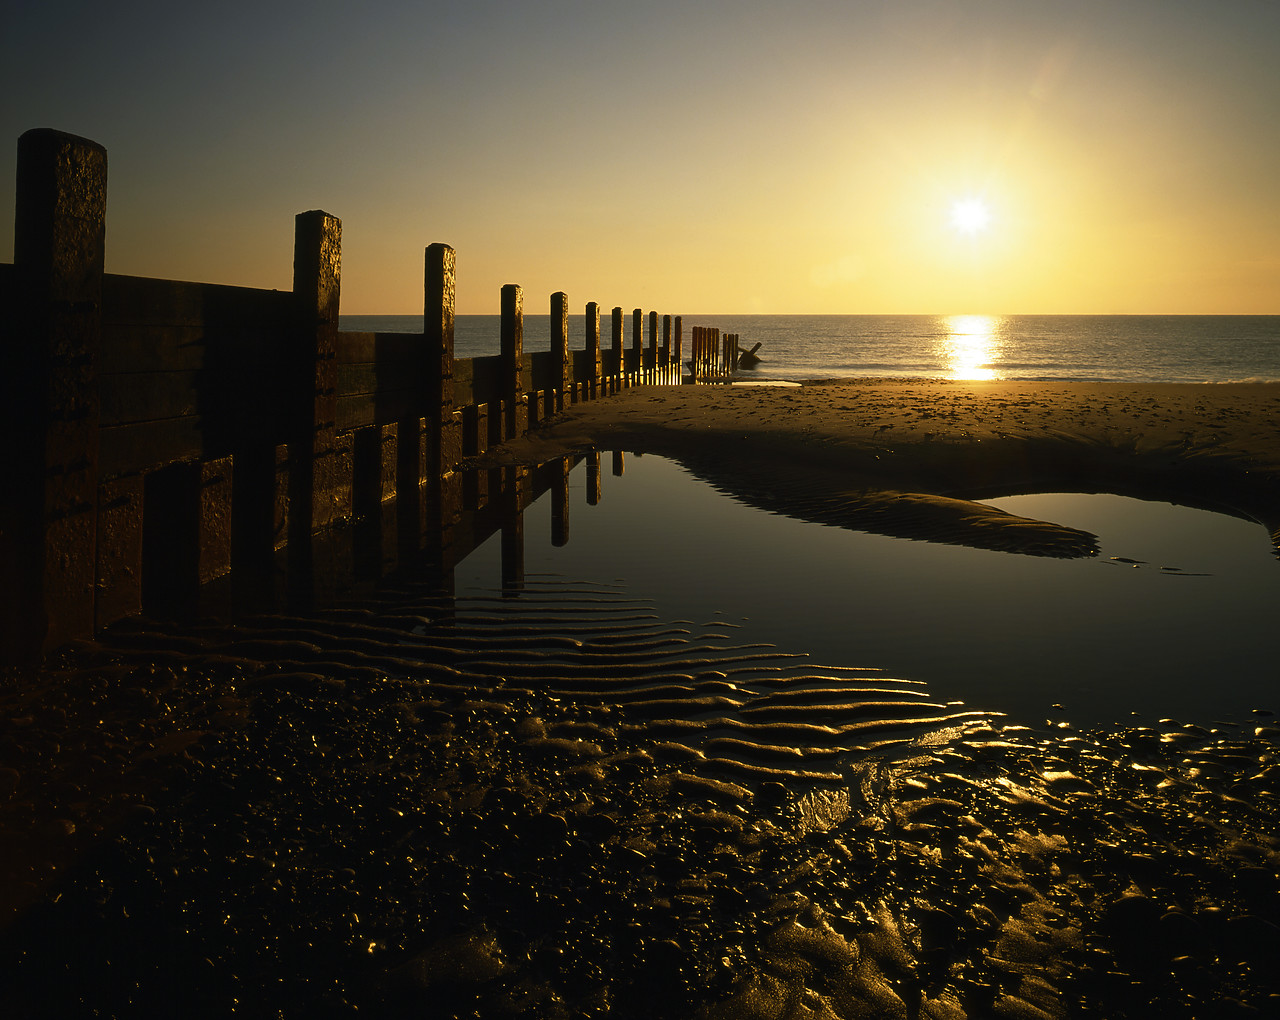 #913420-1 - Sunrise at Horsey Gap Beach, near Horsey, Norfolk, England